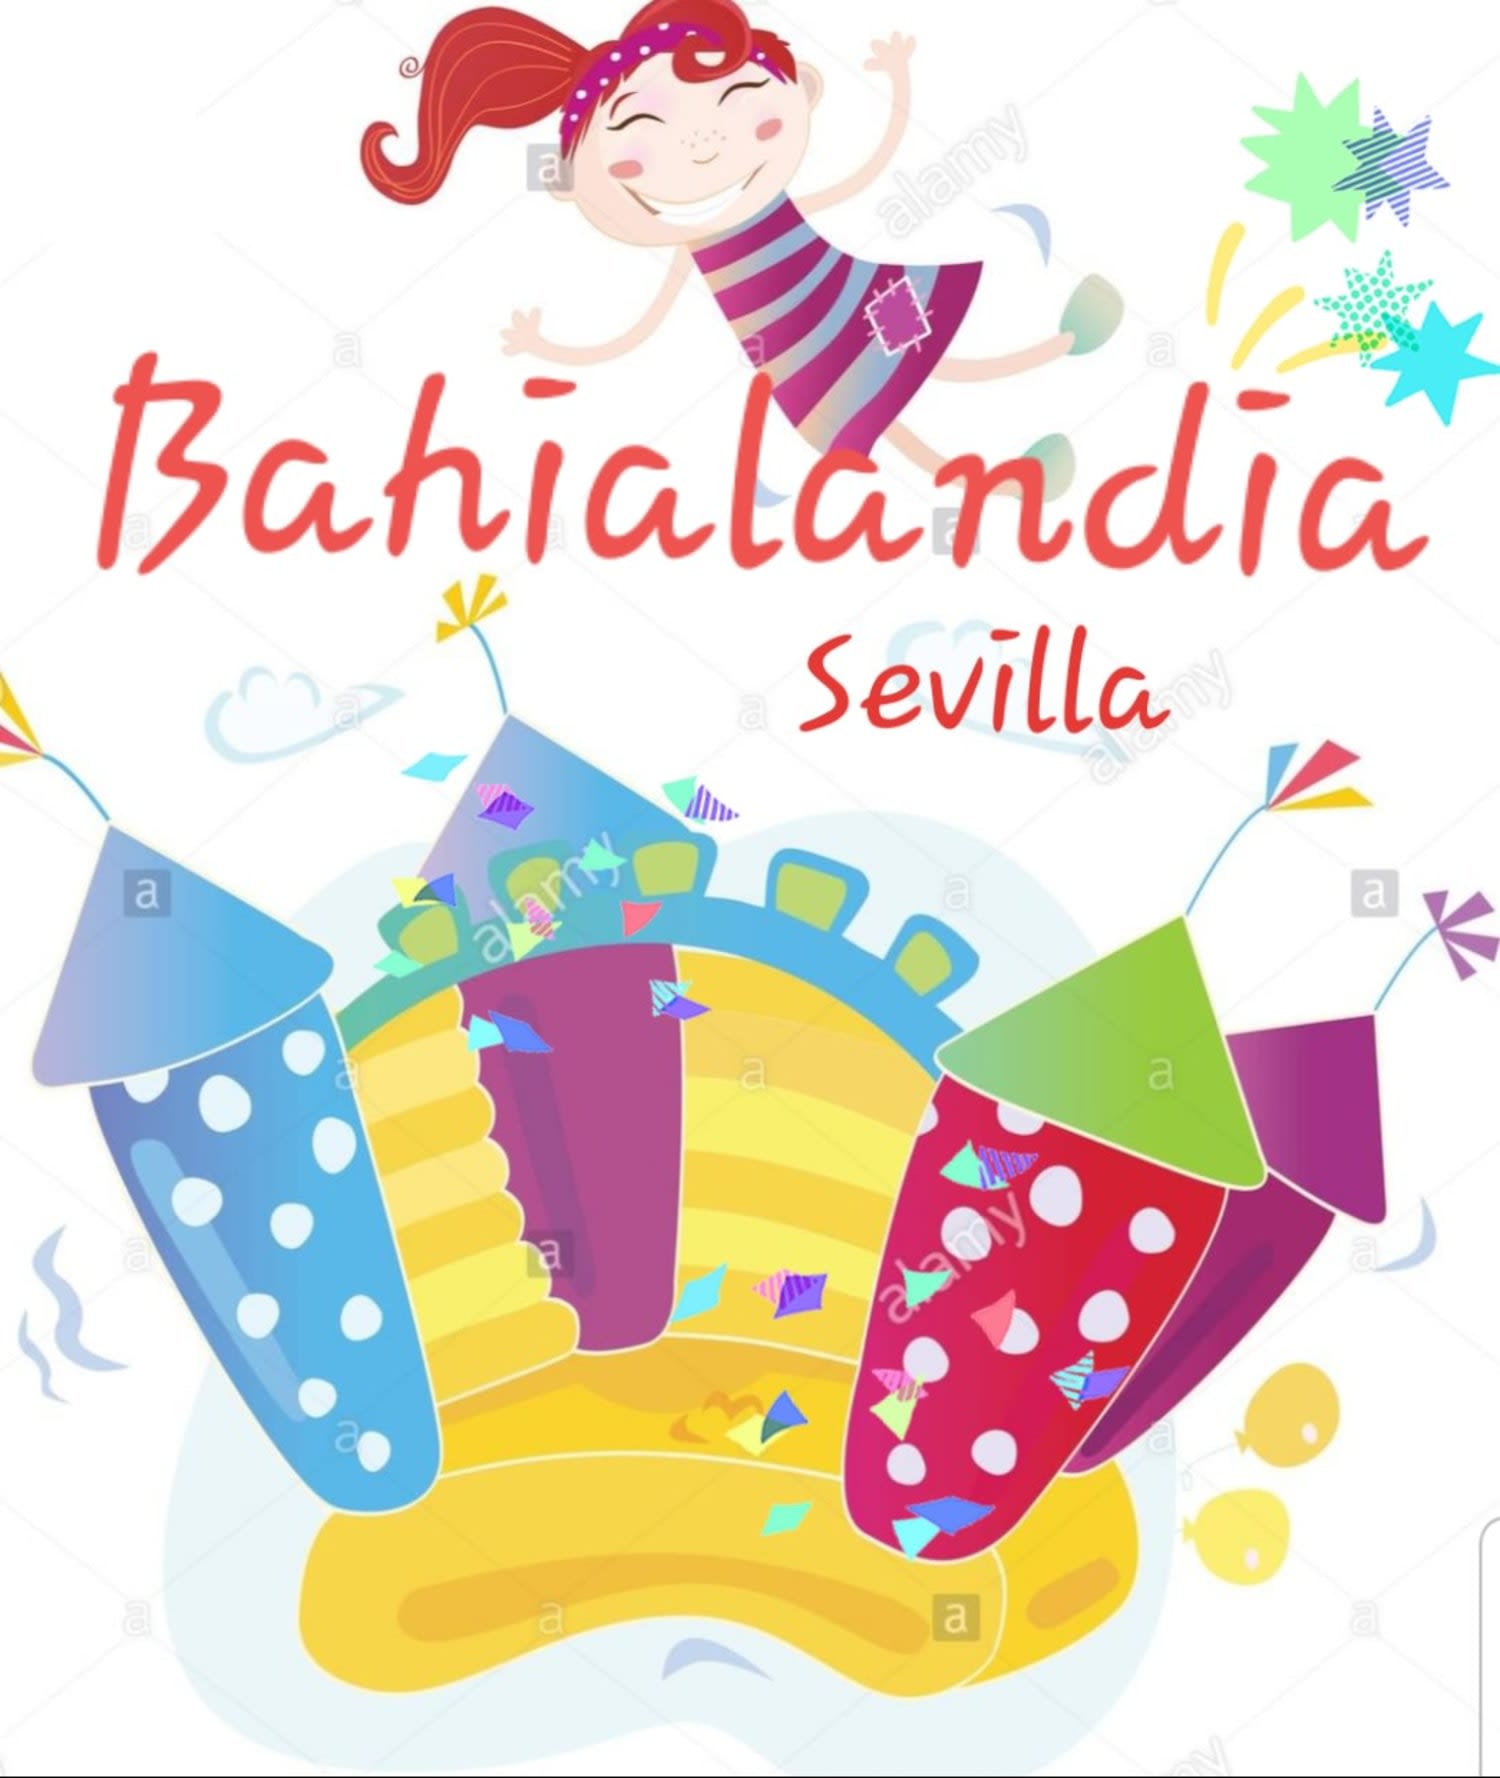 Bahíalandia Sevilla